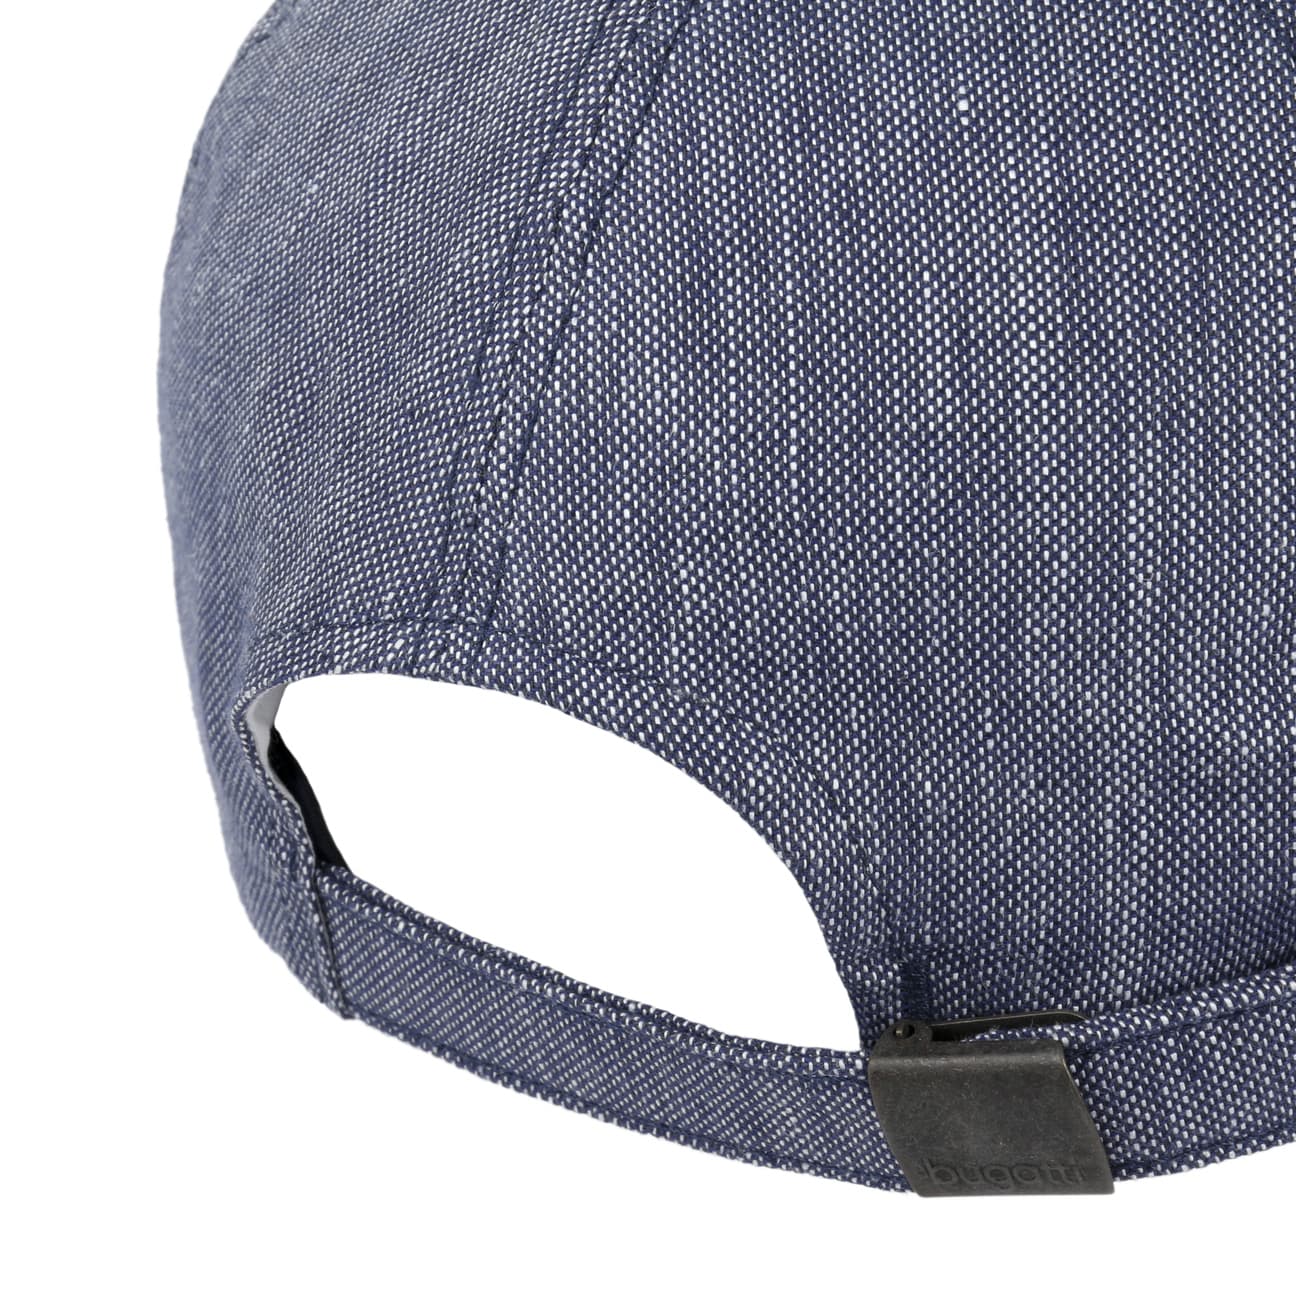 Classic Summer Cap by bugatti --> Shop Hats, Beanies & Caps online ▷  Hatshopping